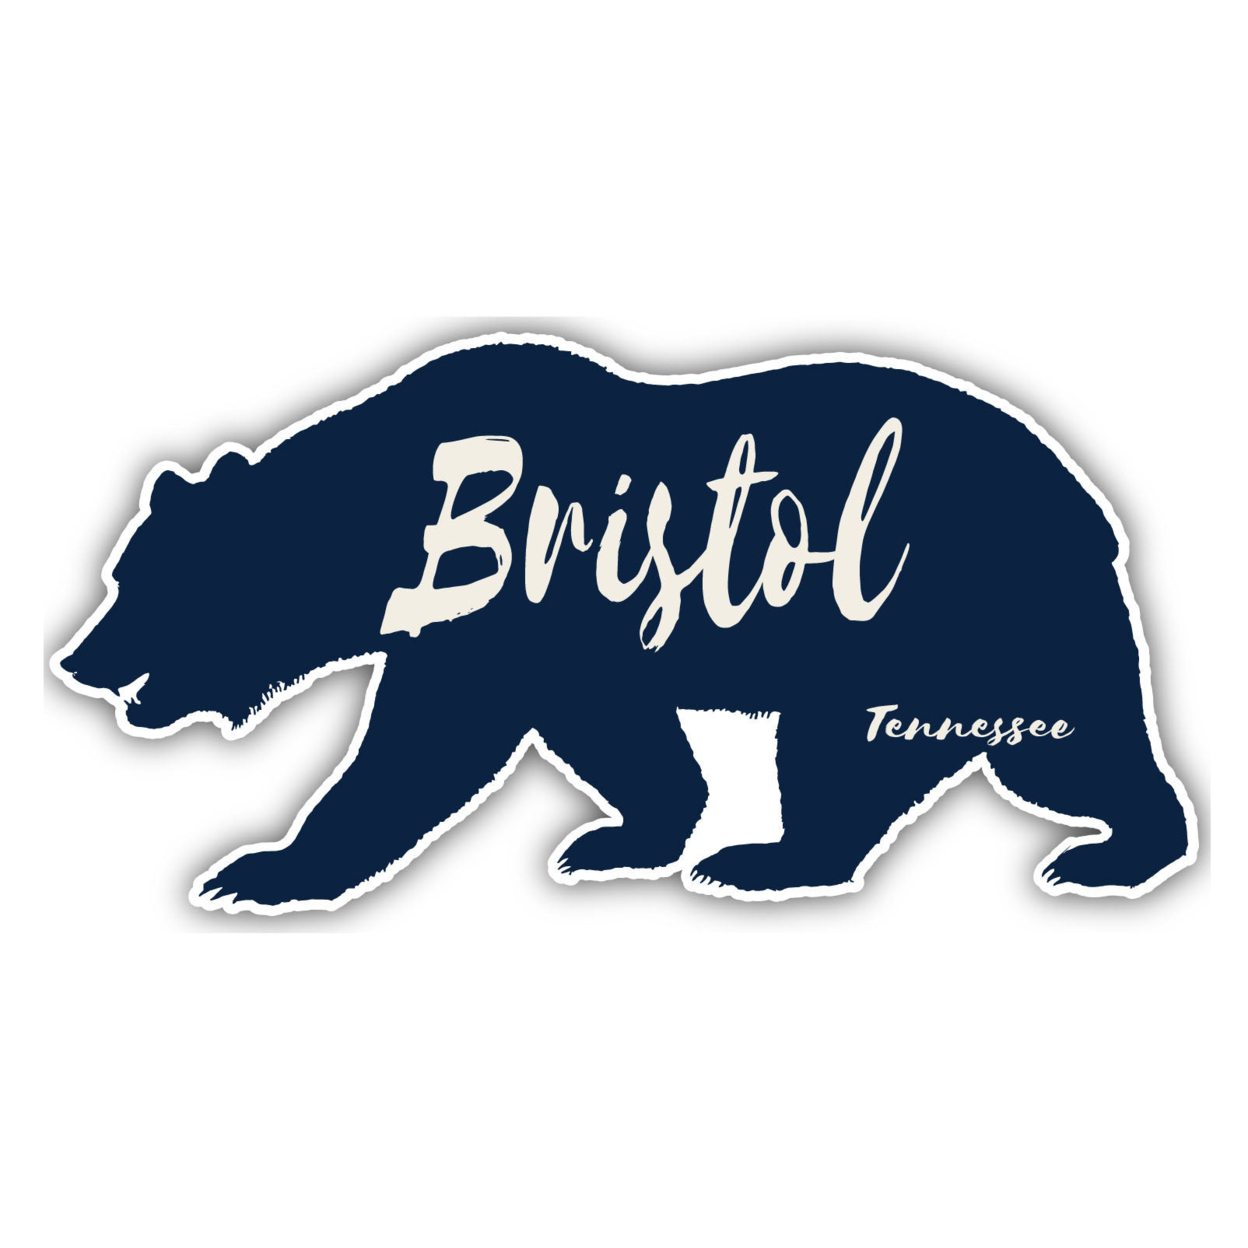 Bristol Tennessee Souvenir Decorative Stickers (Choose Theme And Size) - Single Unit, 6-Inch, Bear